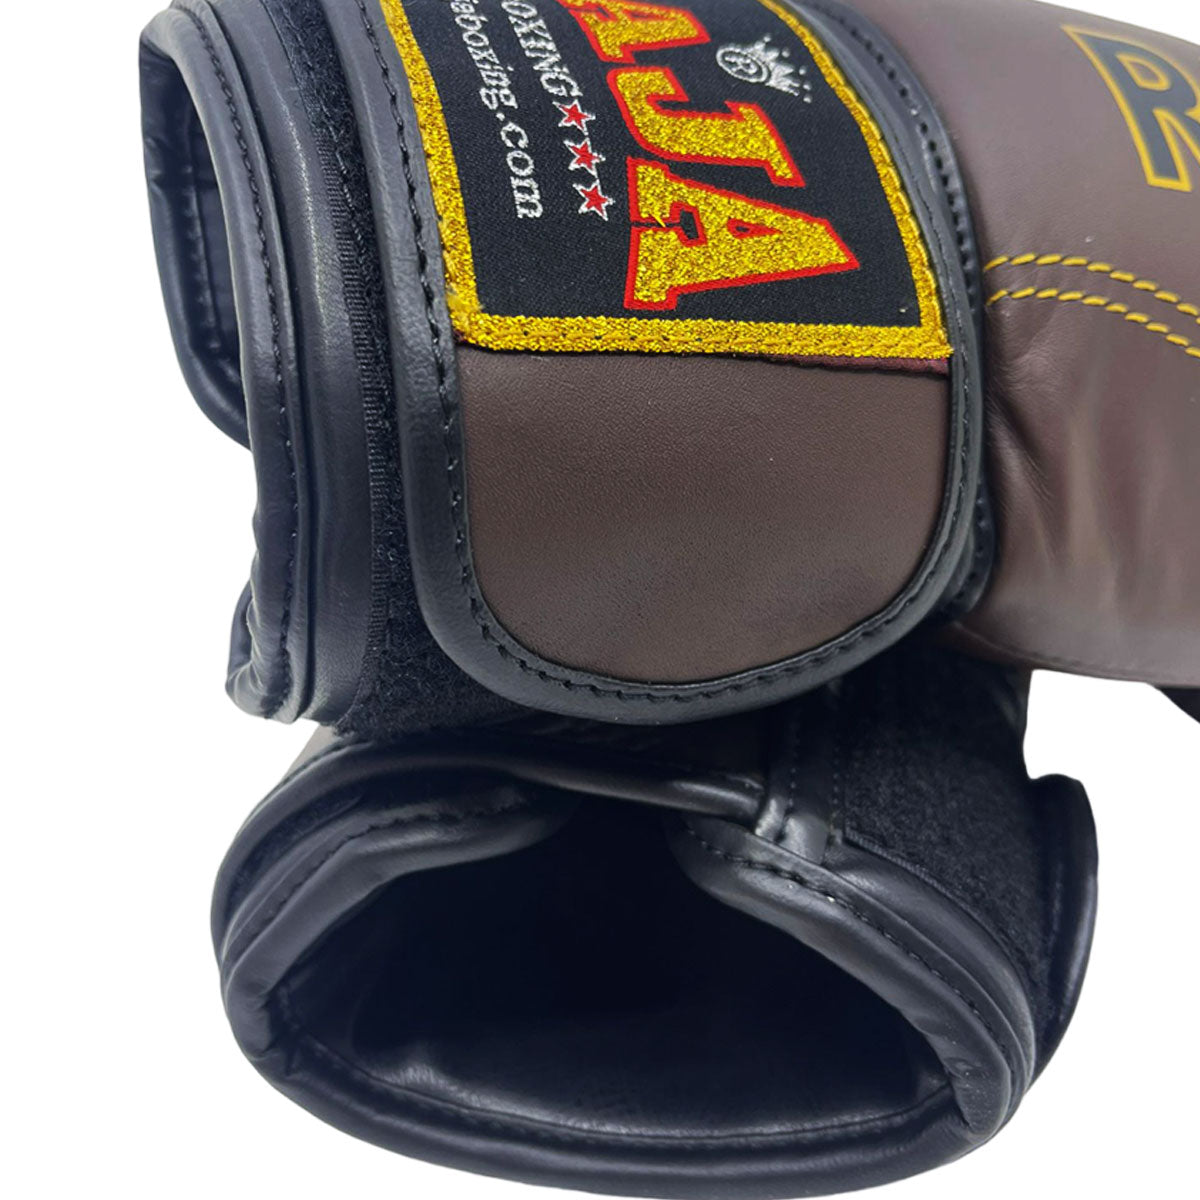 Boxing Gloves Raja RJB-P1 Dark Chocolate Premium "Porsche design" Muay Thai